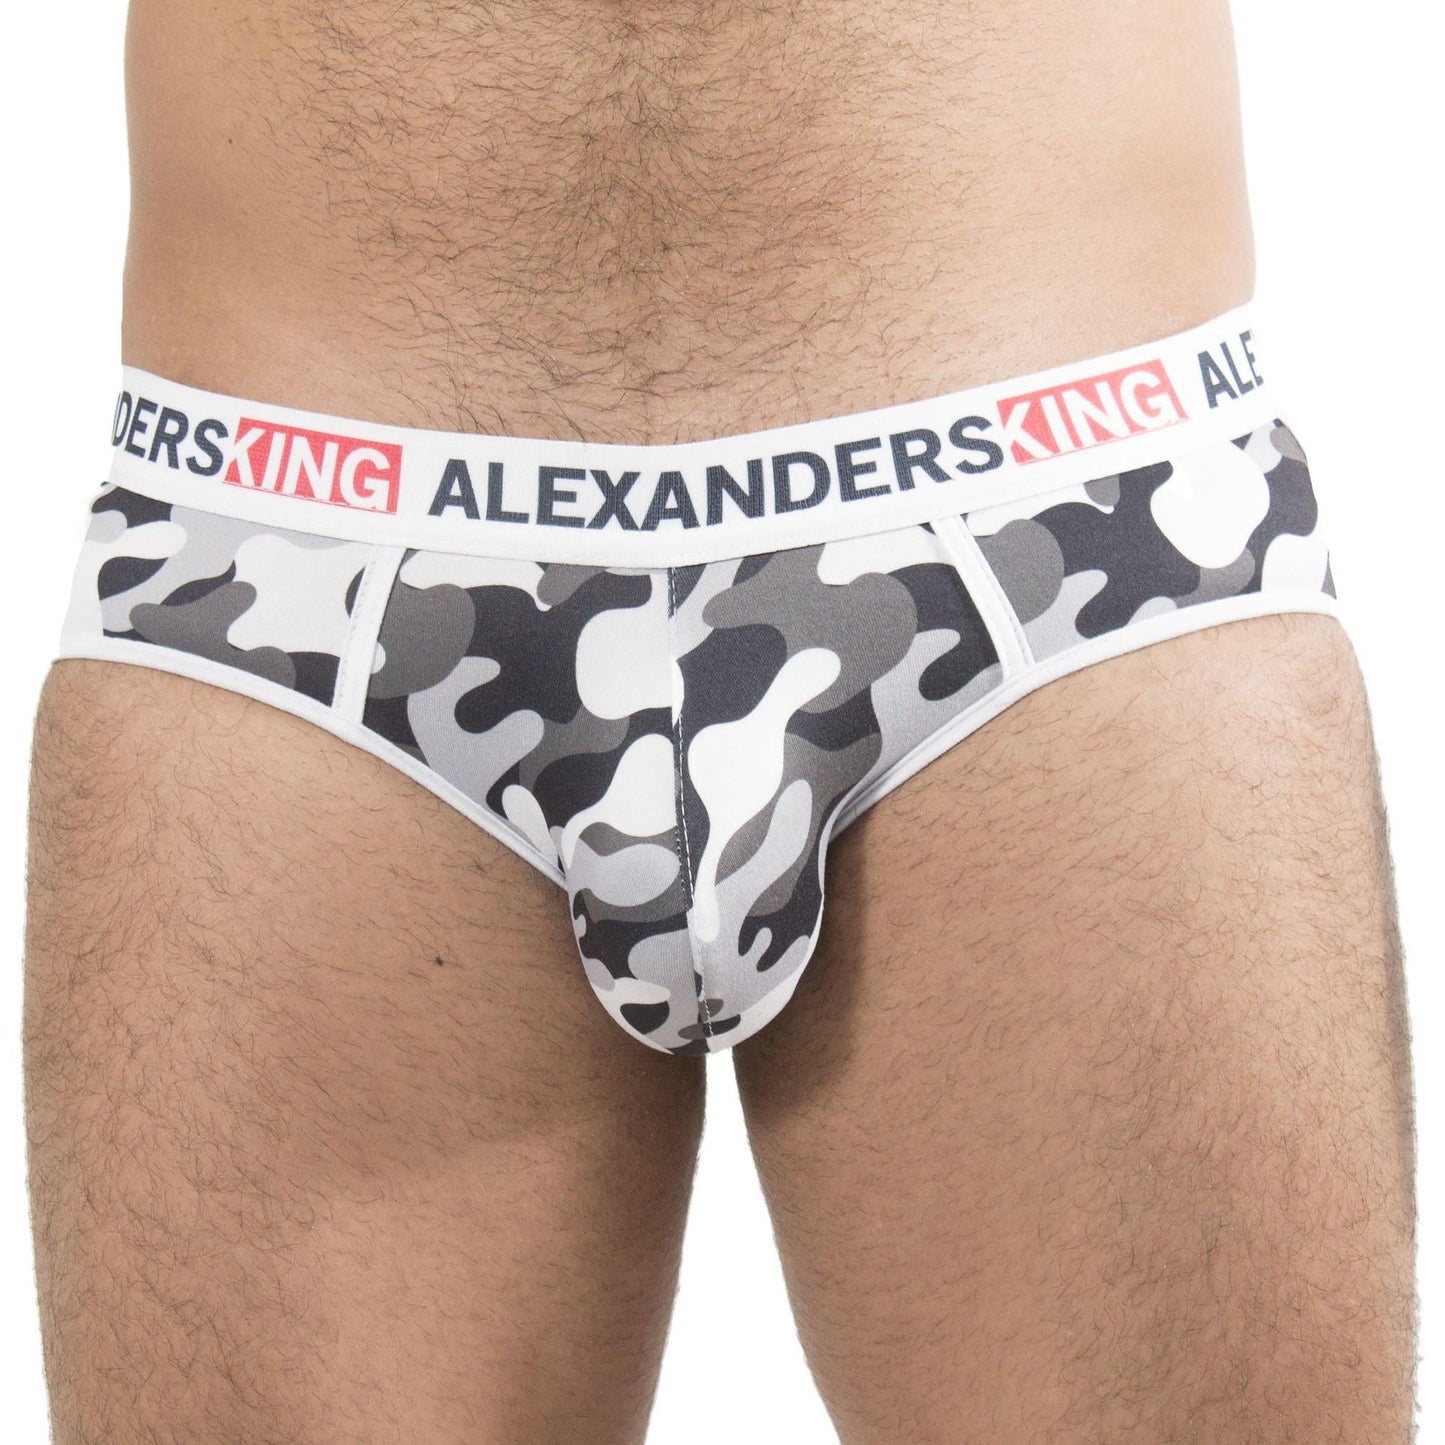 TP0193 - Brief Commando Night Squad Skinit - AlexandersKing Underwear